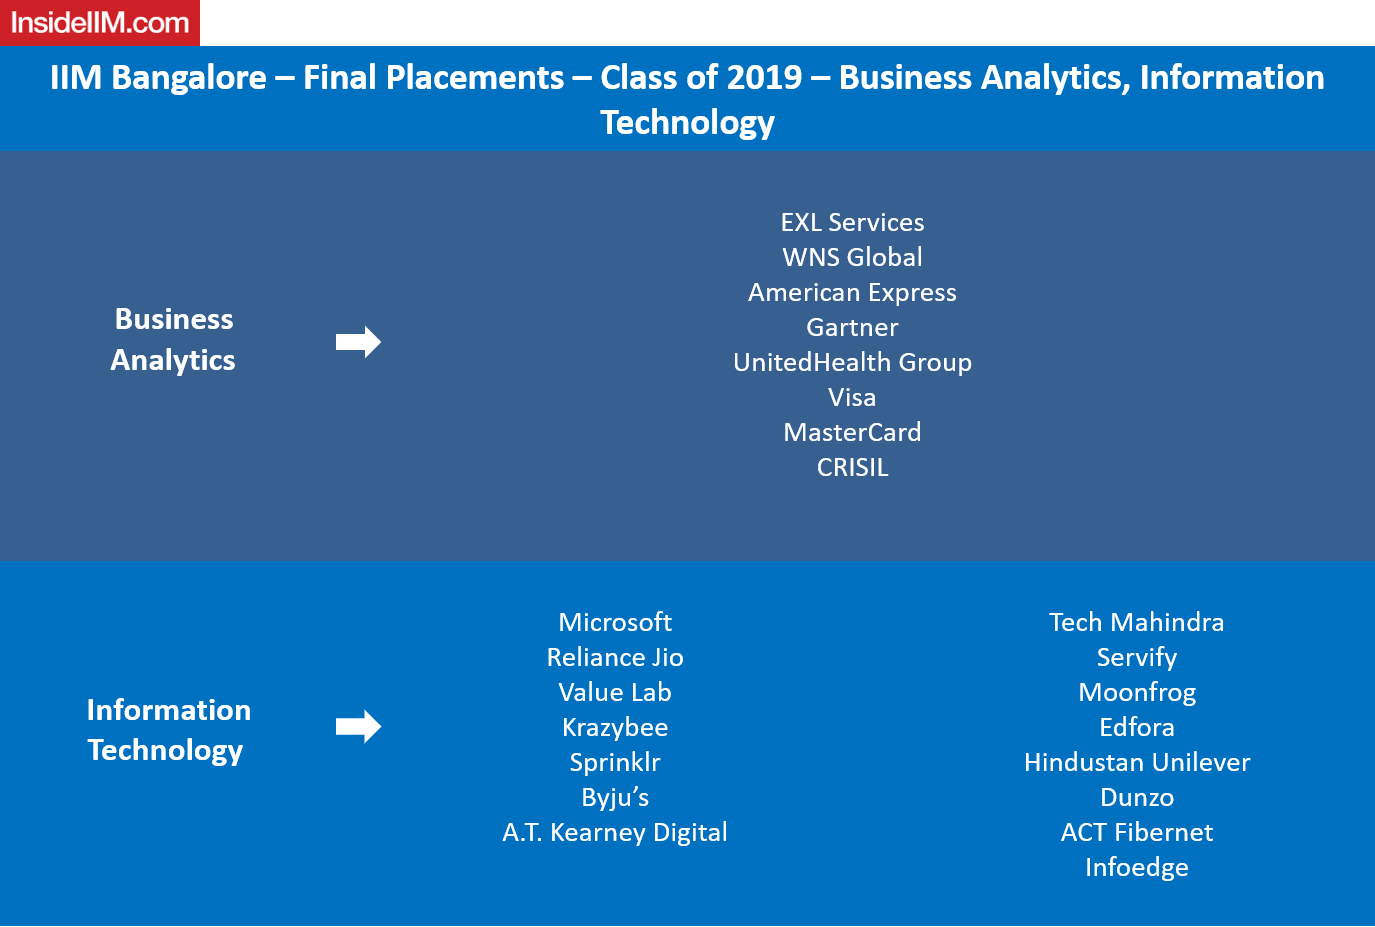 IIM Bangalore Final Placements 2019 - Analytics and IT